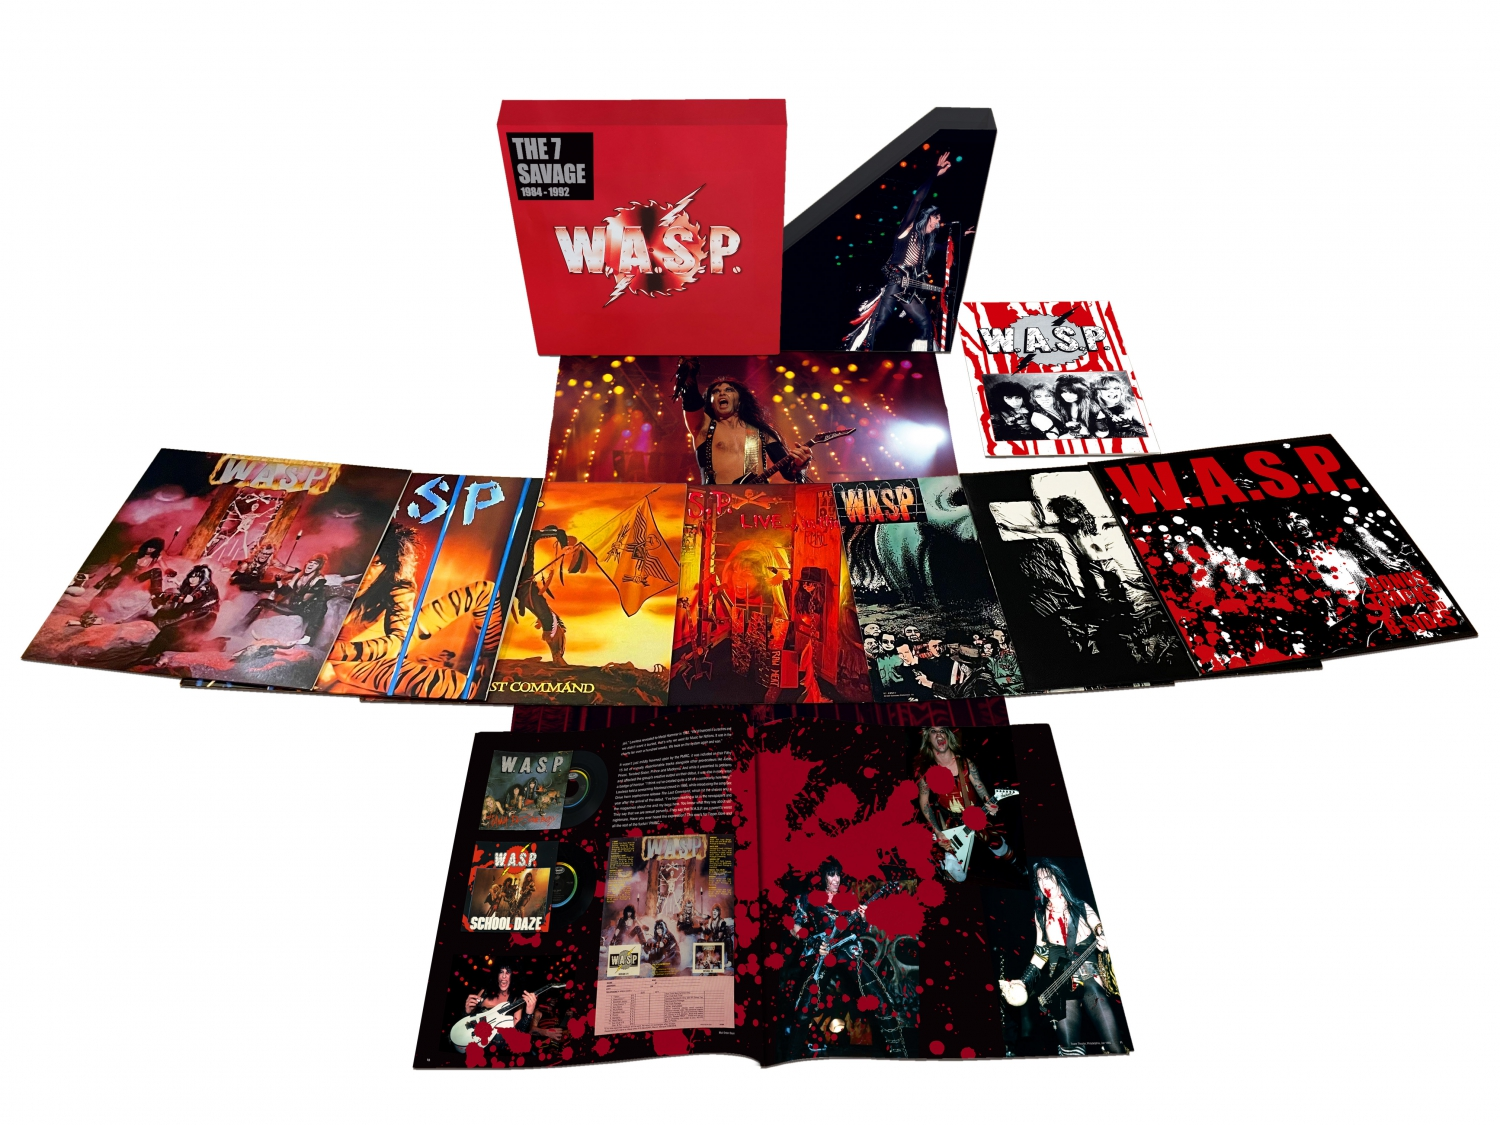 W.A.S.P. - The 7 Savage: 1984-1992 [VINYL LP BOXSET]